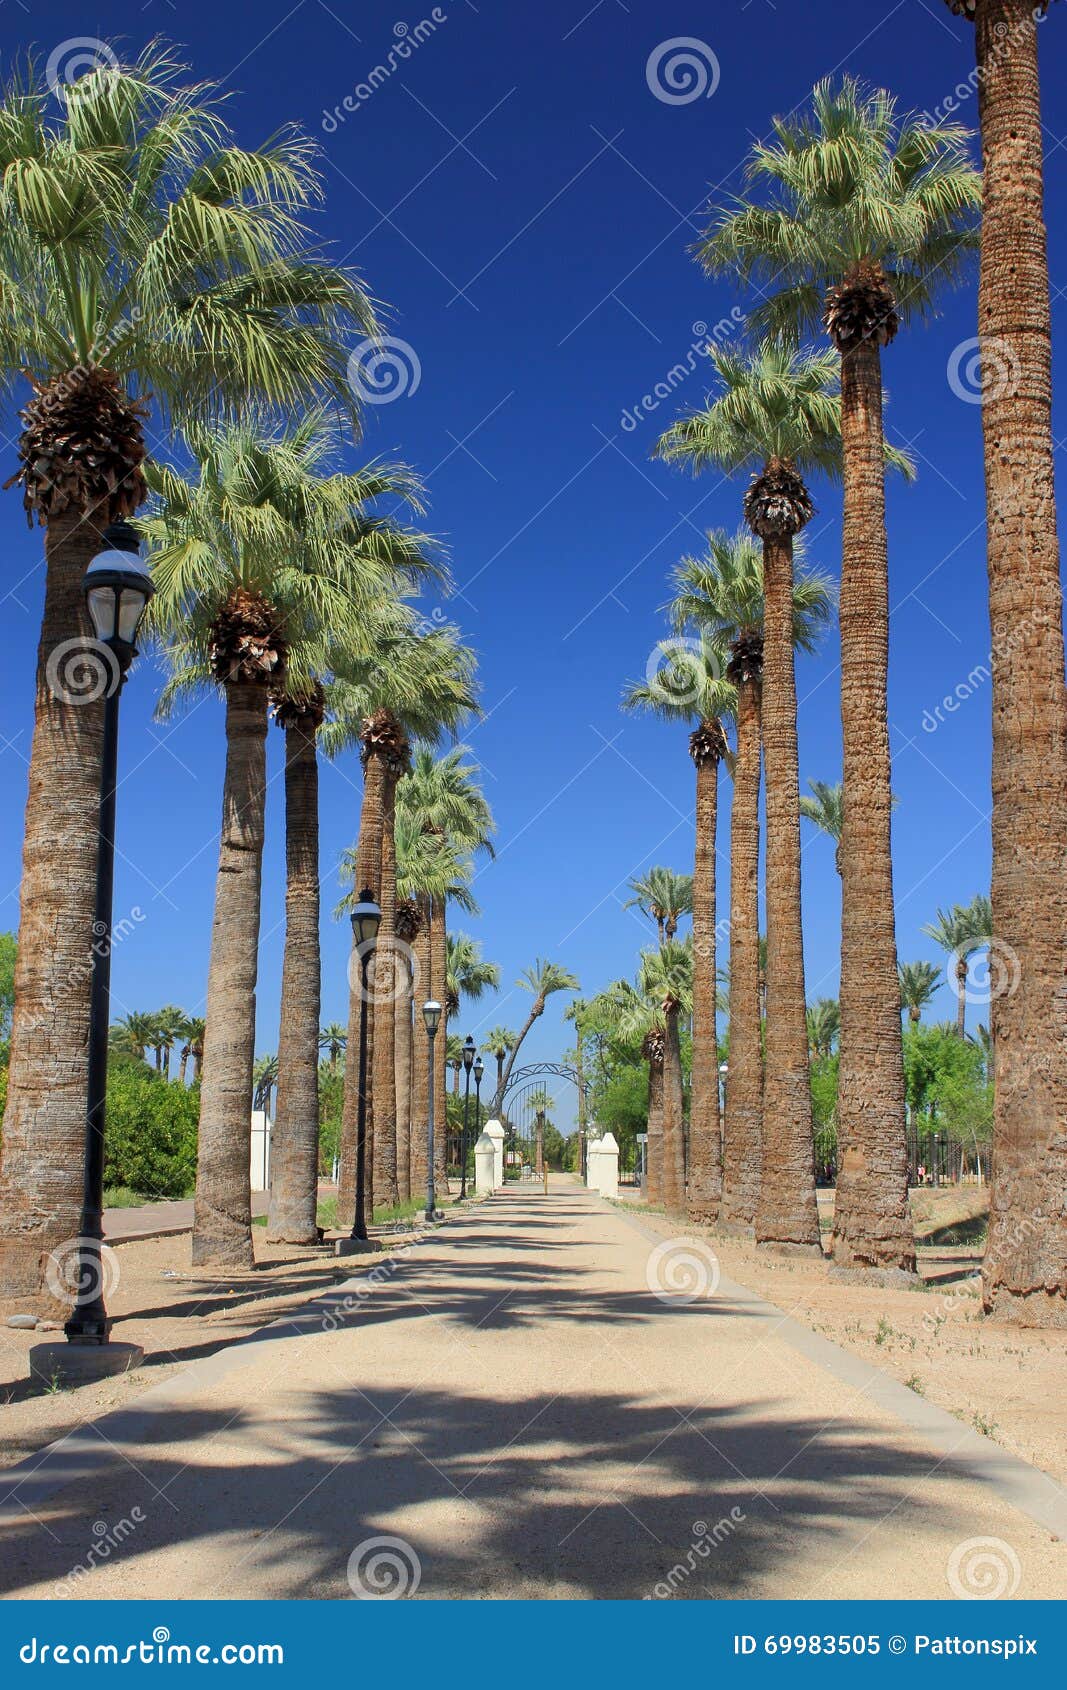 palm tree lane